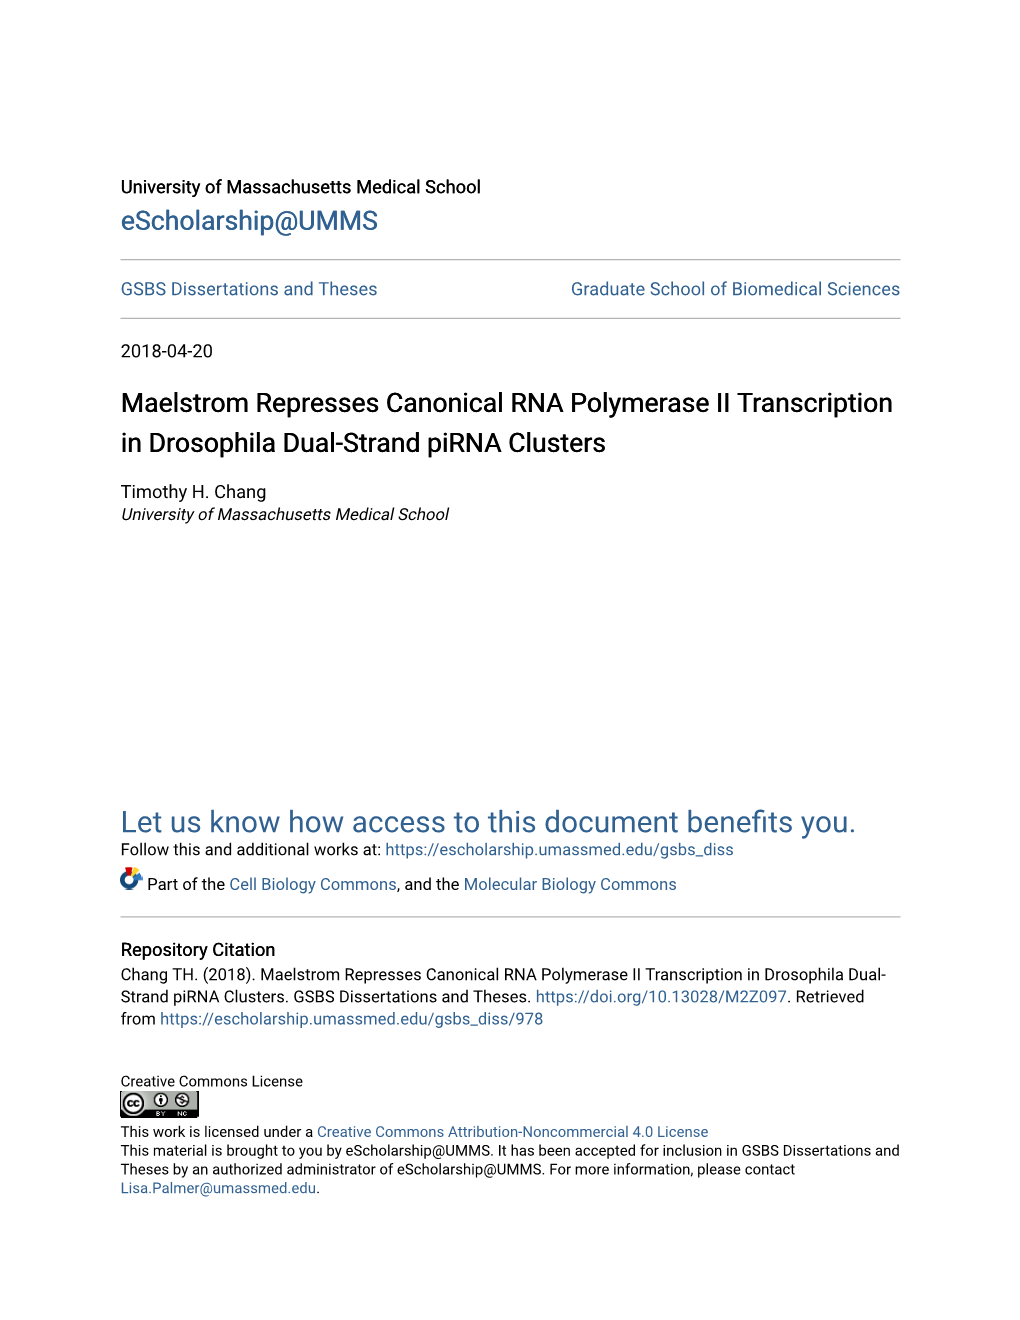 Maelstrom Represses Canonical RNA Polymerase II Transcription in Drosophila Dual-Strand Pirna Clusters